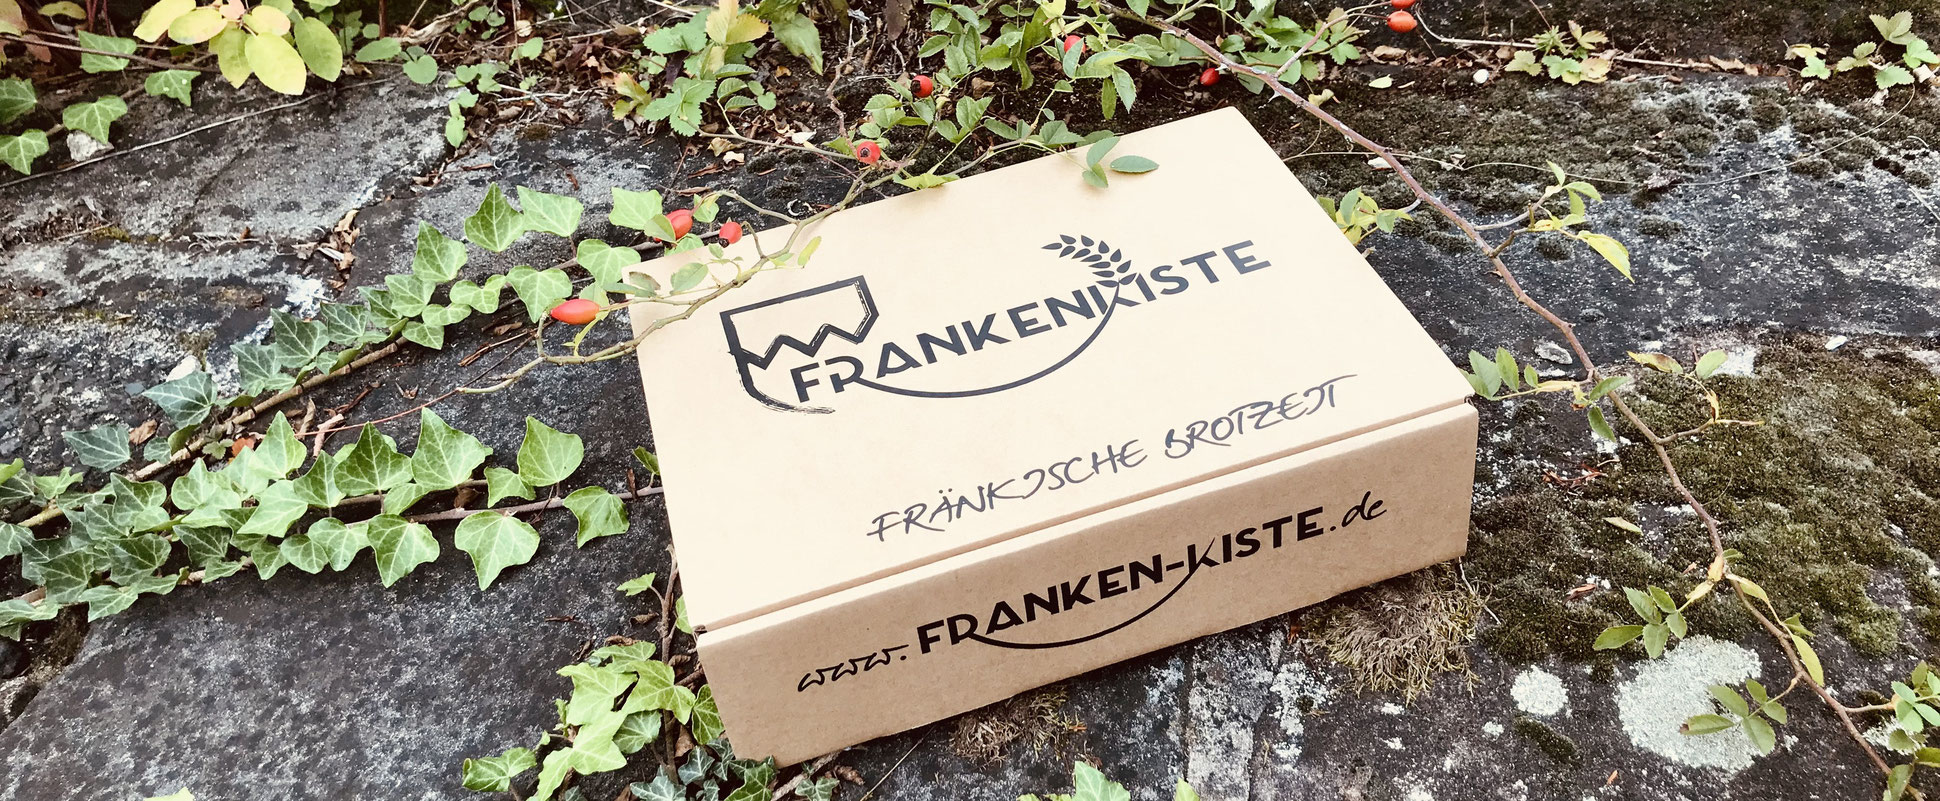 (c) Franken-kiste.de